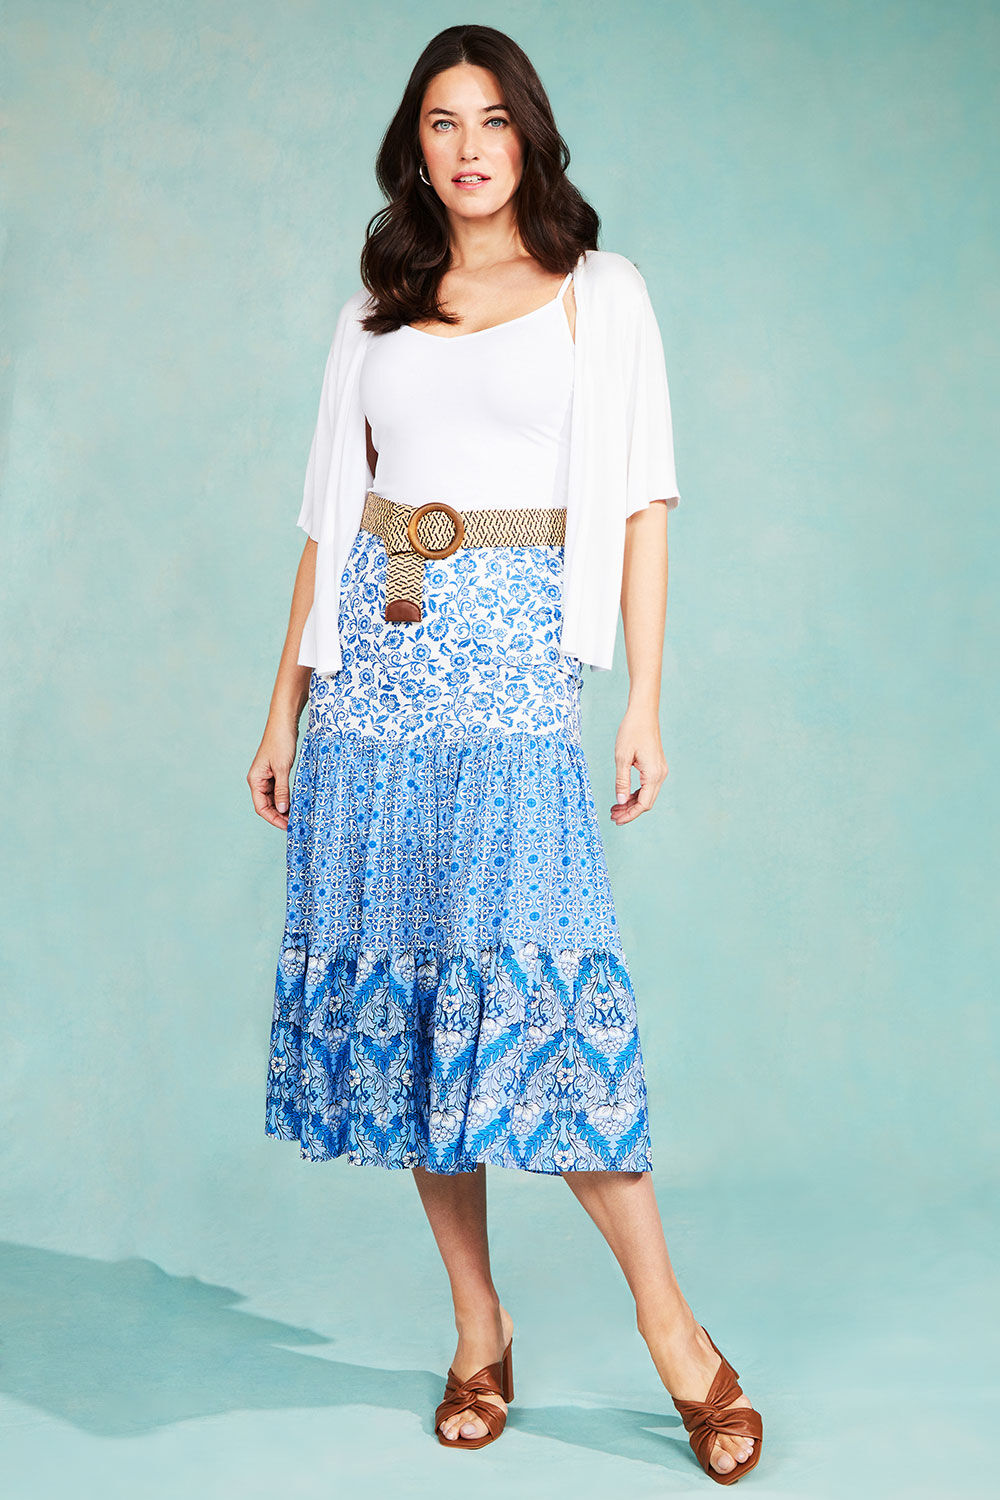 Bonmarche Blue Tile Print Tiered Cotton Elasticated Skirt, Size: 20